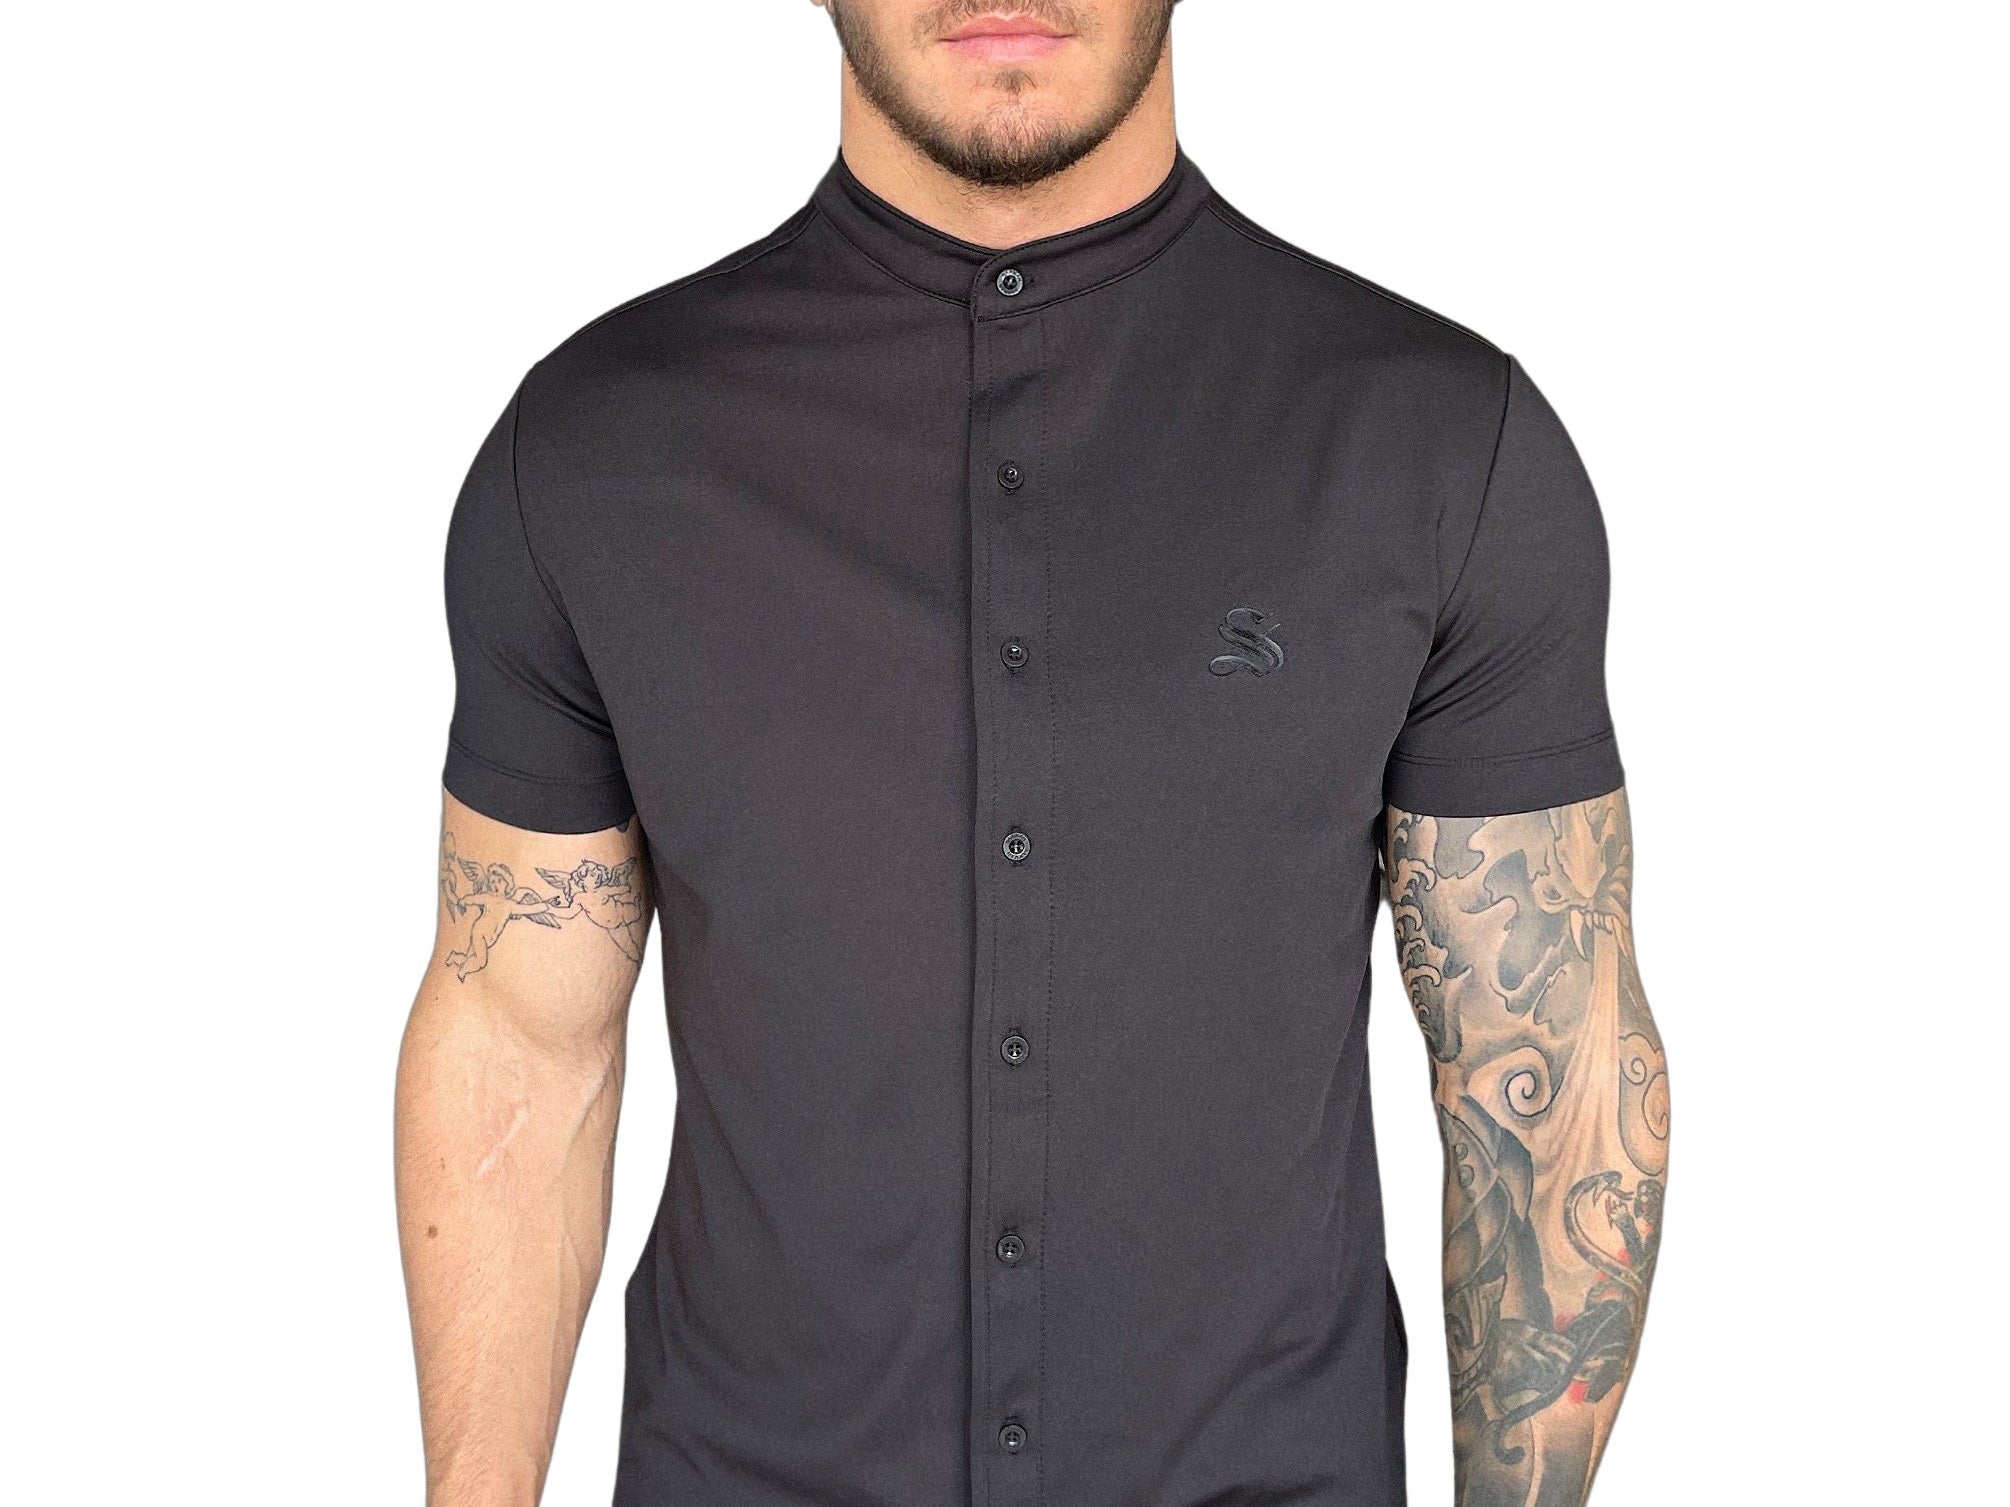 Blakinos - Black shirt for Men - Sarman Fashion - Wholesale Clothing Fashion Brand for Men from Canada